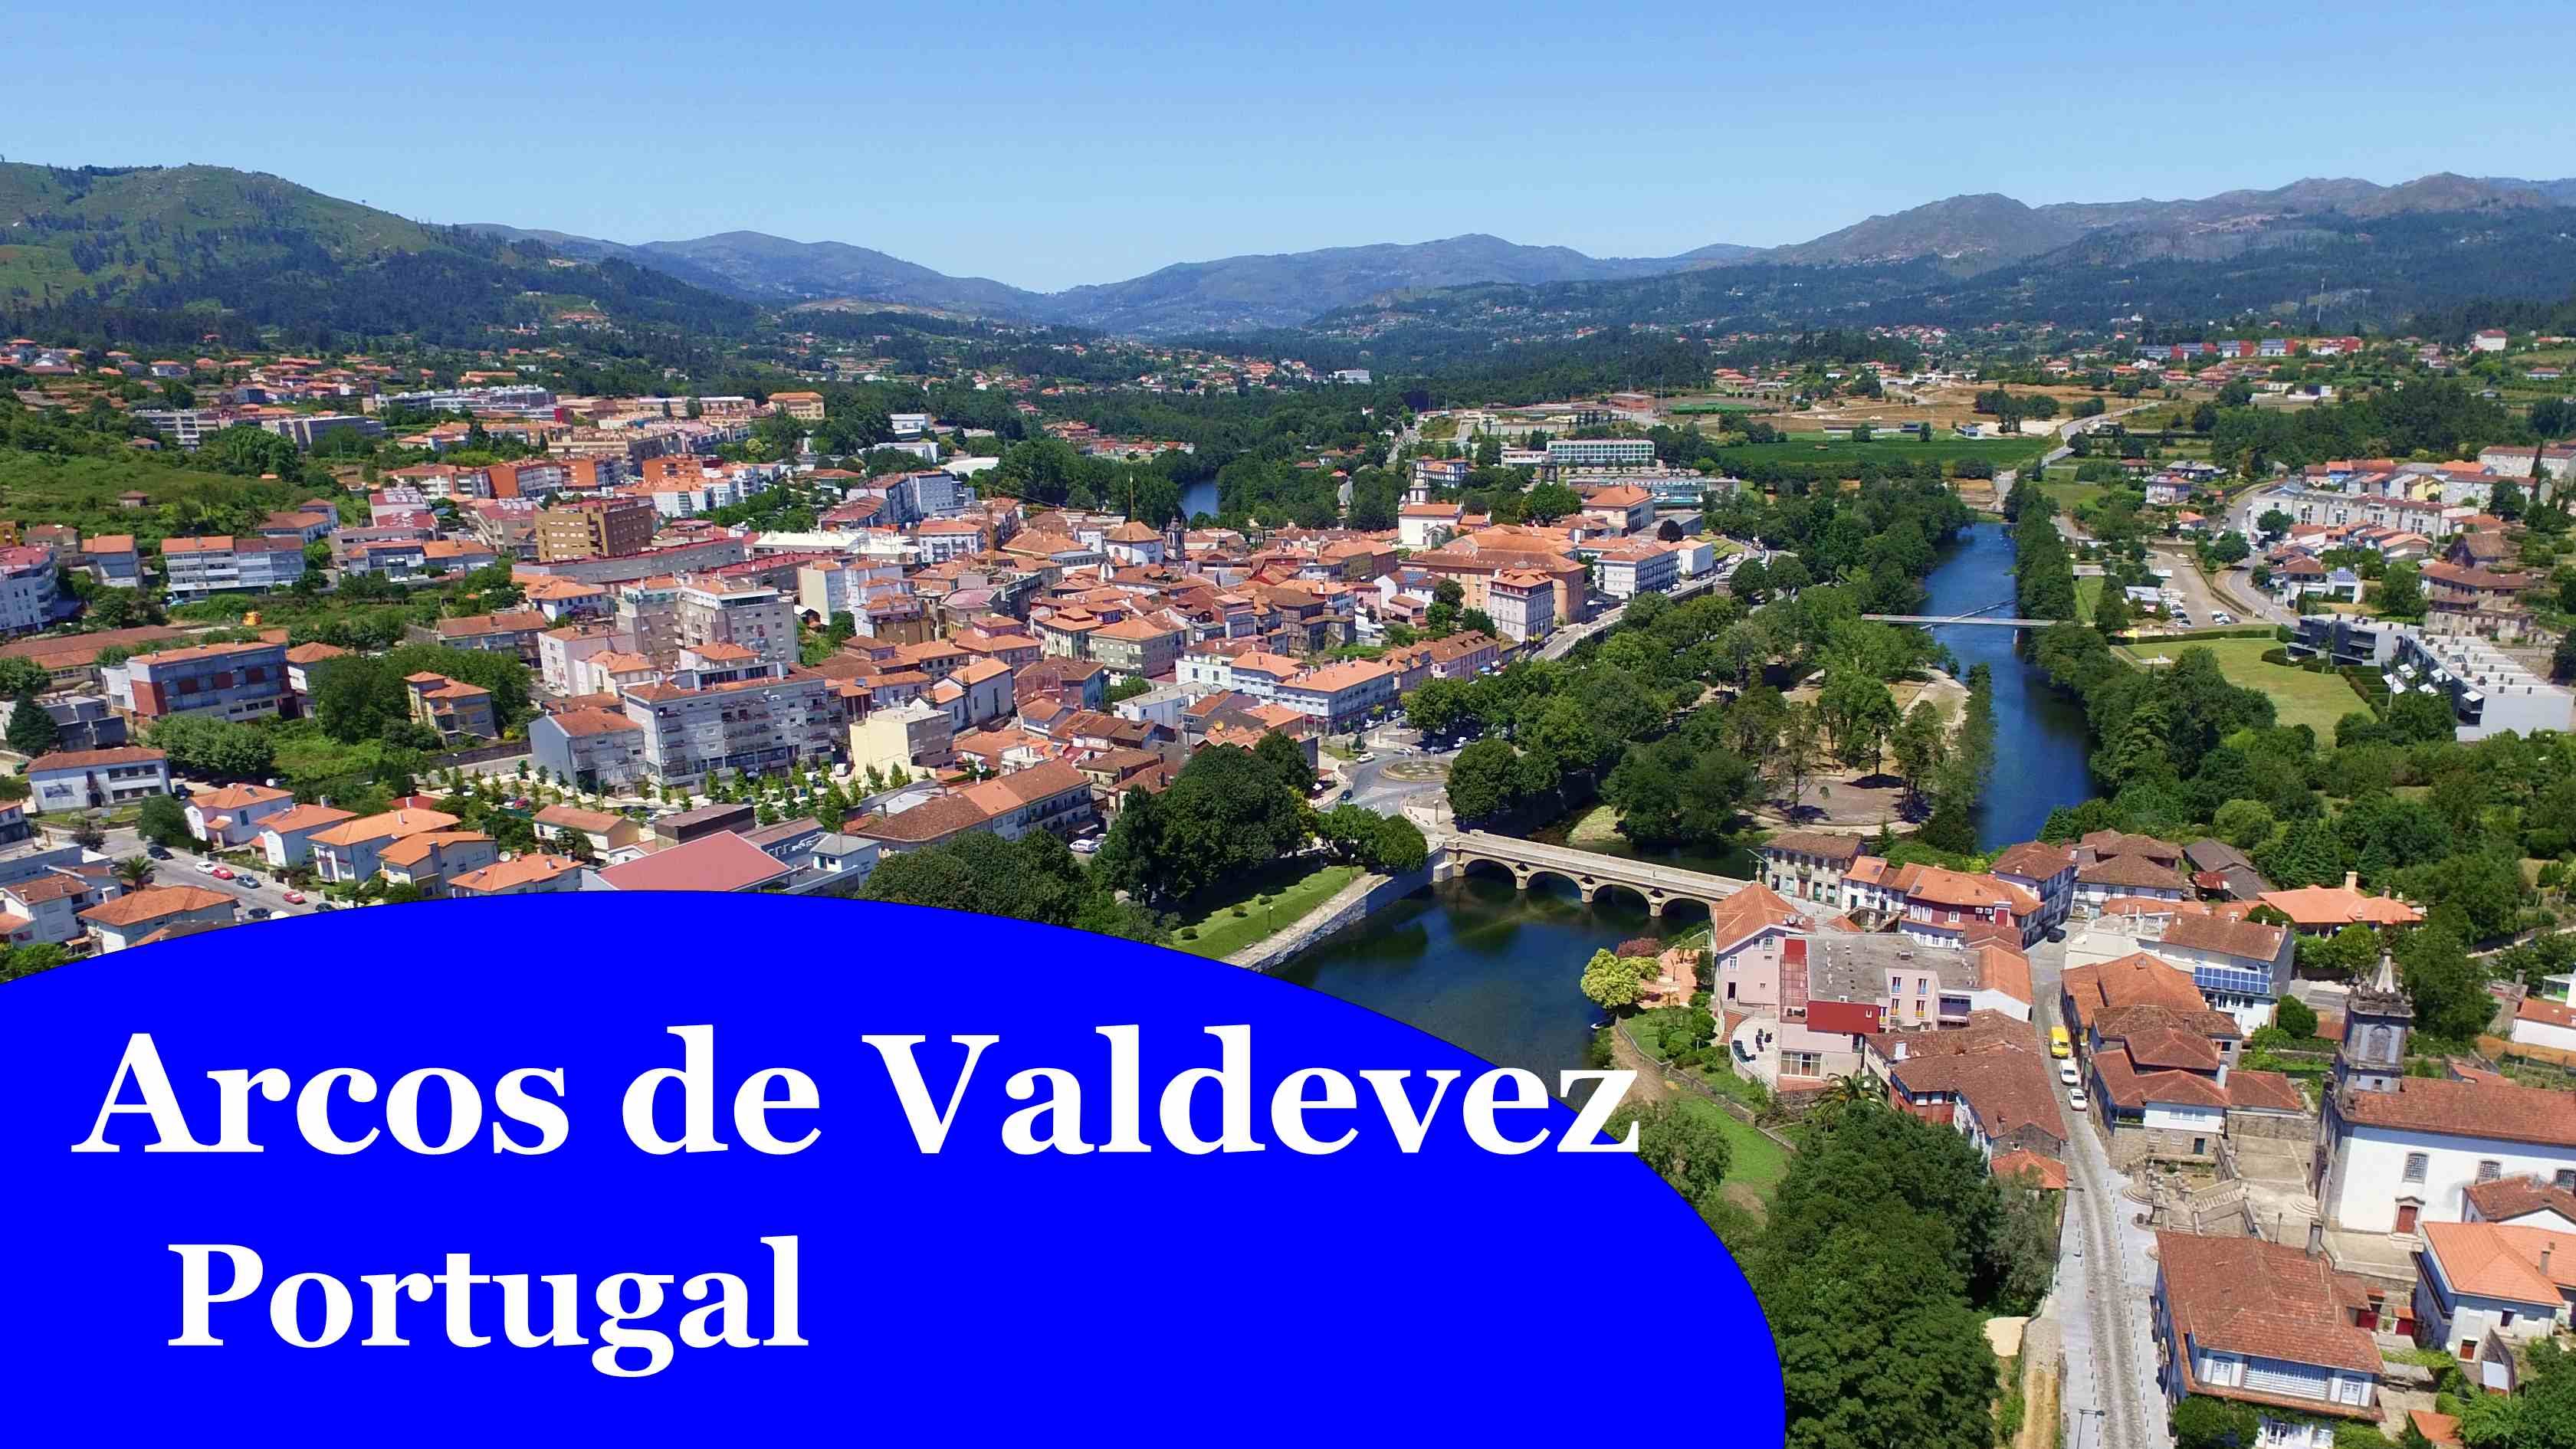 Arcos de Valdevez, Portugal (4K Ultra HD Aerial View) - YouTube